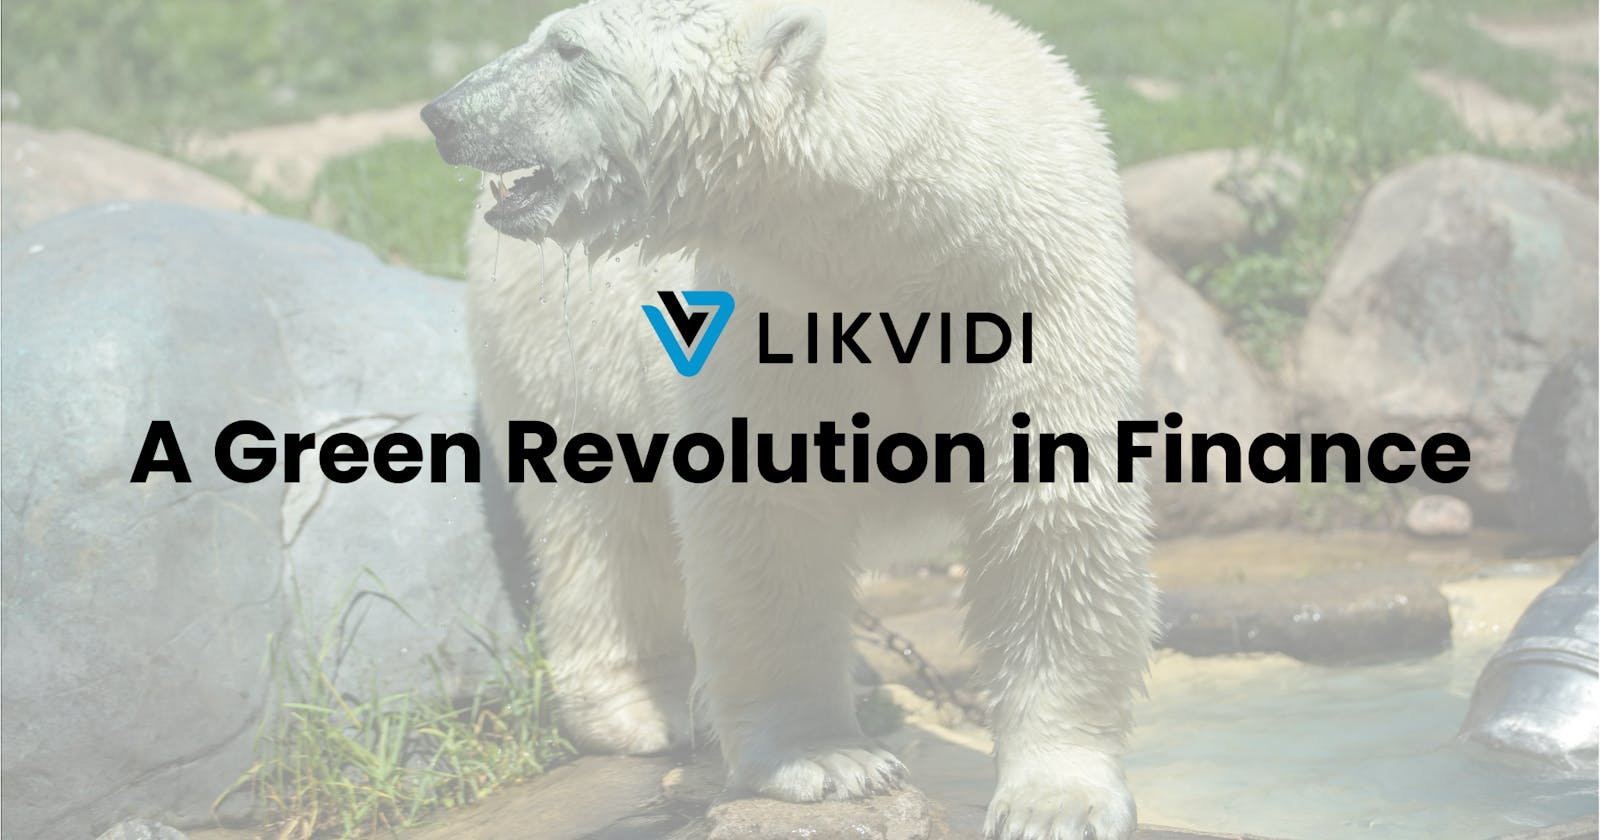 Likvidi: A Green Revolution in Finance